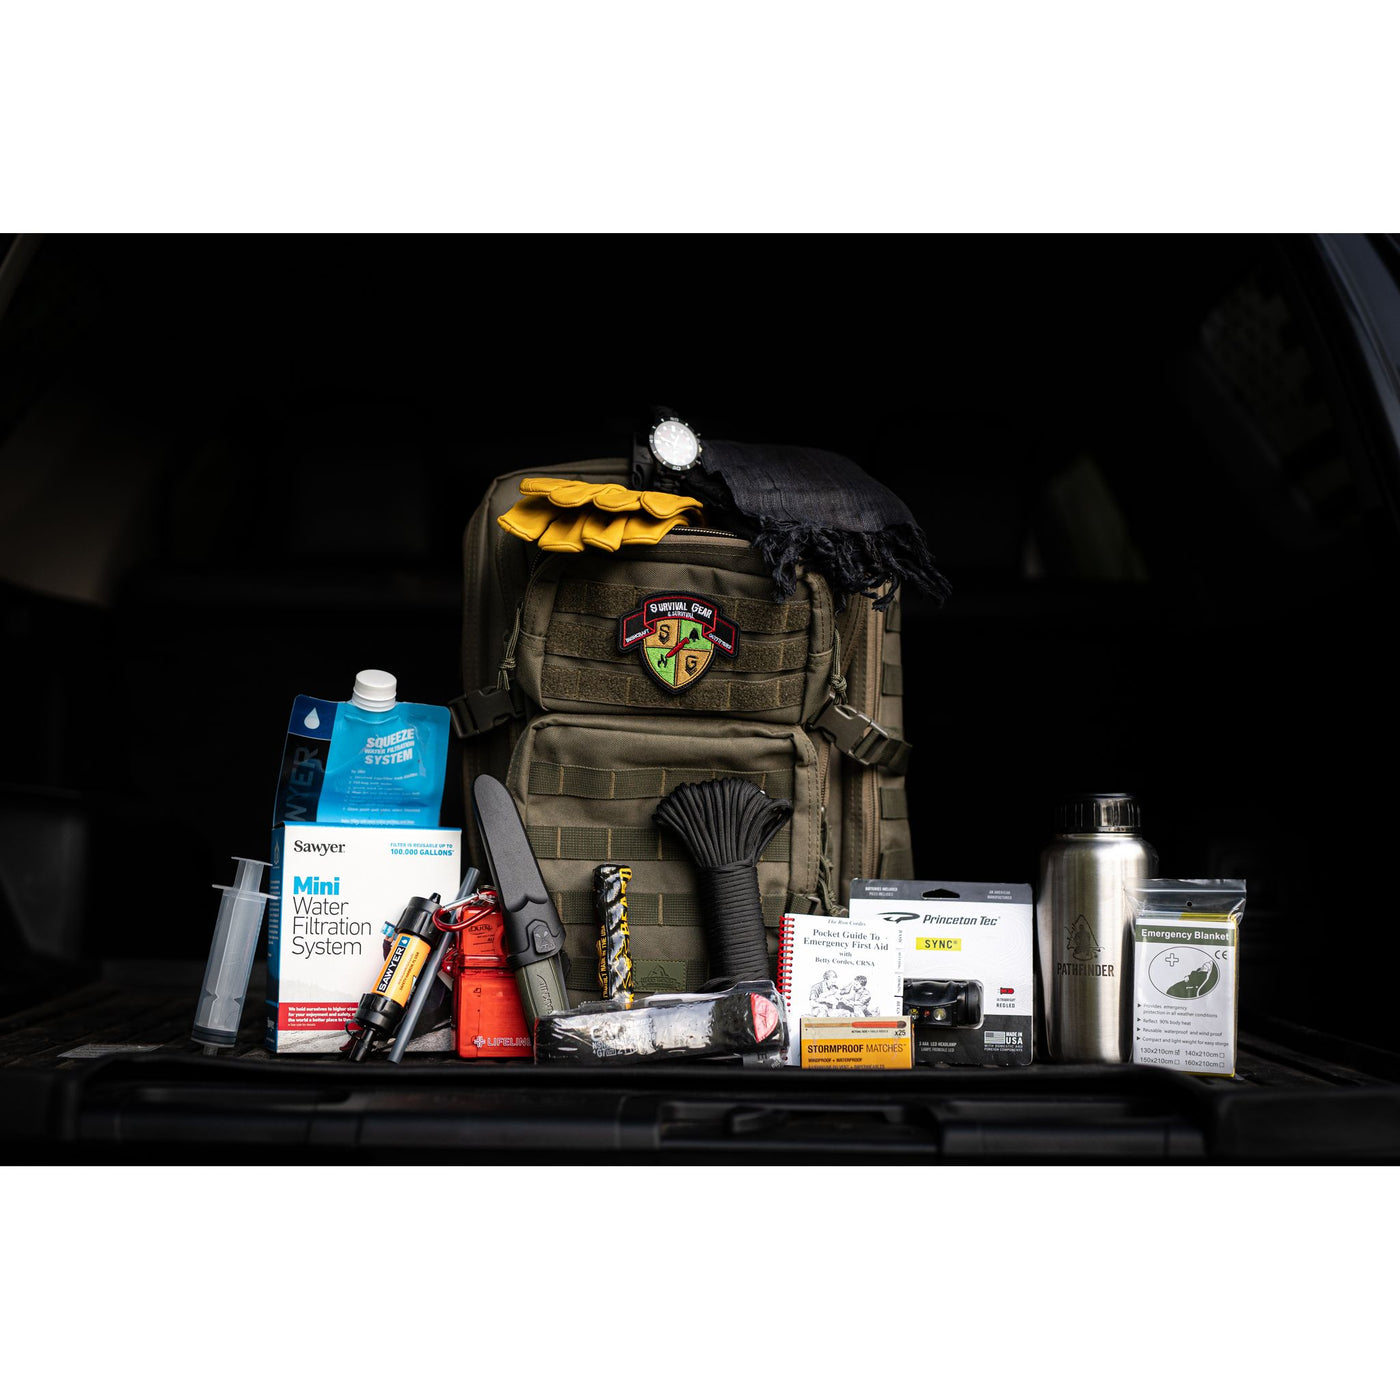 Ultimate Survival Kit  The Best Wilderness Survival Kit – Survival Gear BSO